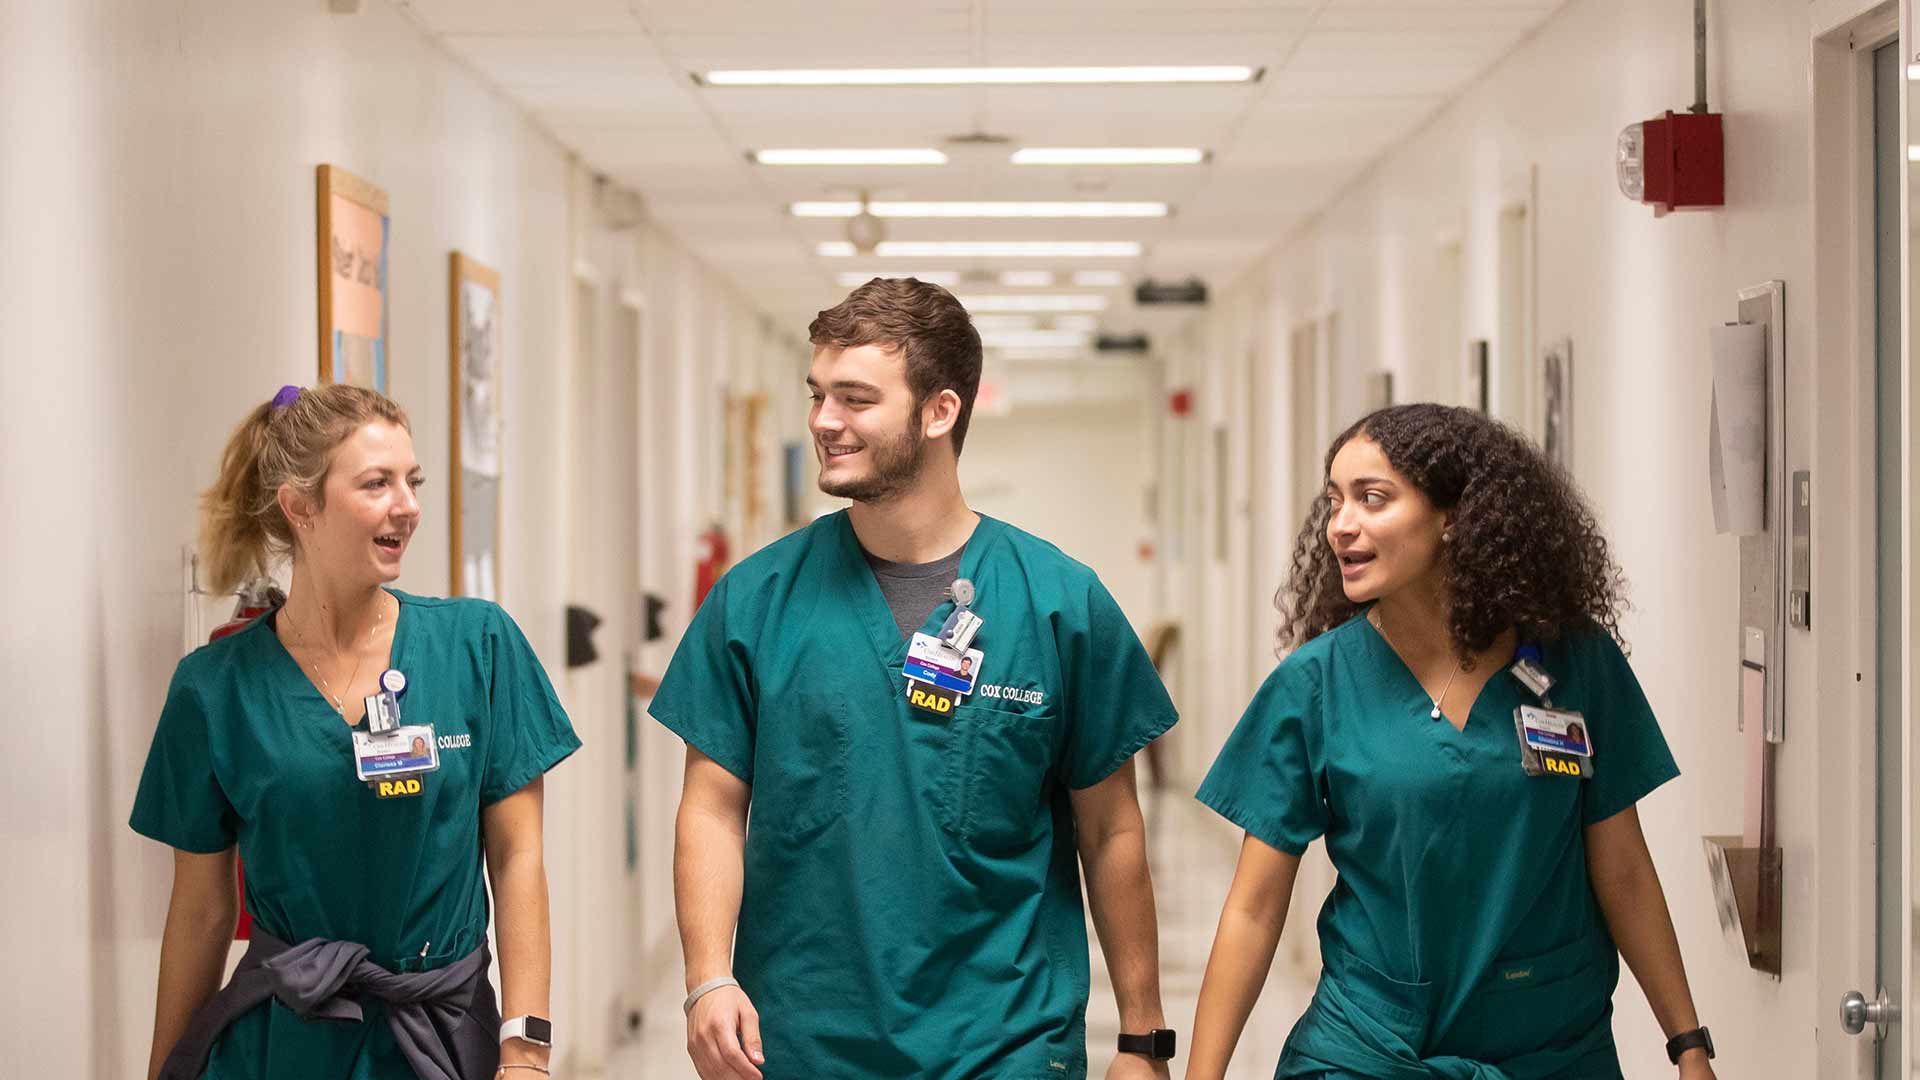 Three students talking and walking down a hallway.